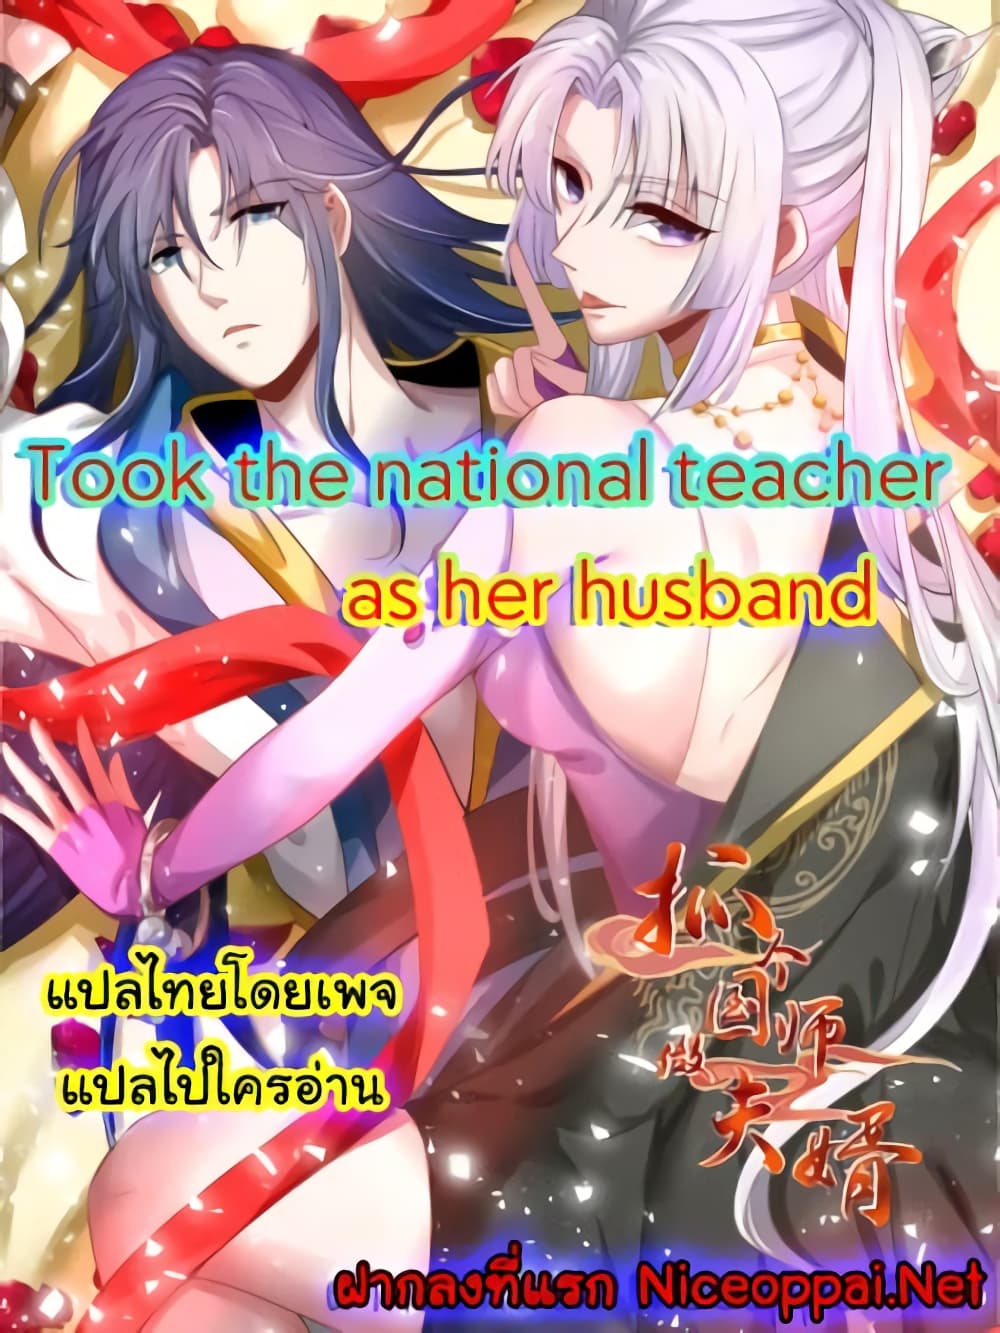 Took the National Teacher as Her Husband 13 (1)